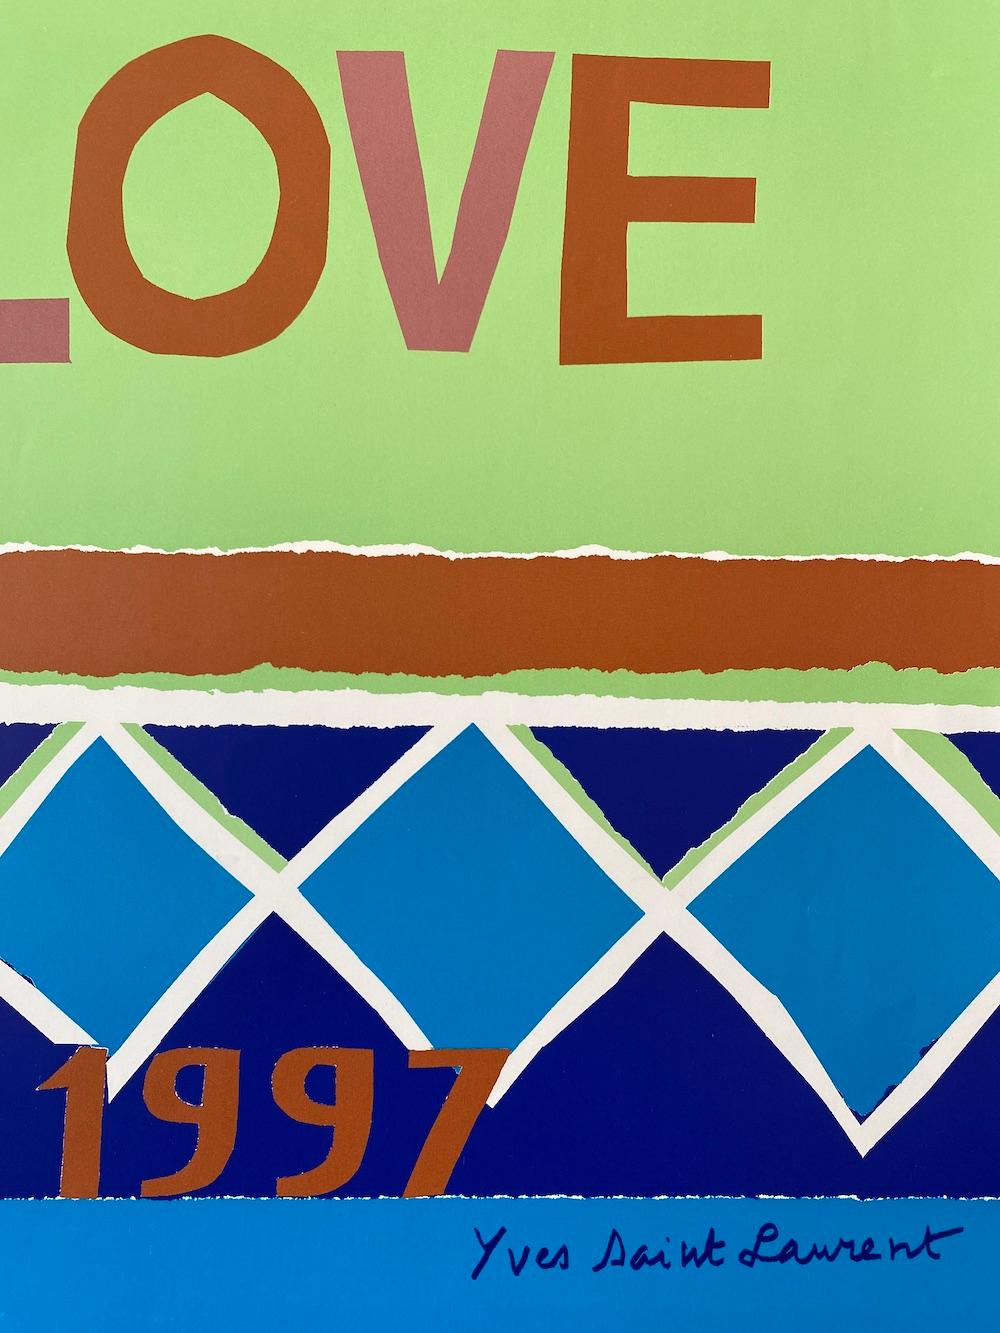 French Yves Saint Laurent 'LOVE 1997' Original Vintage Poster   For Sale